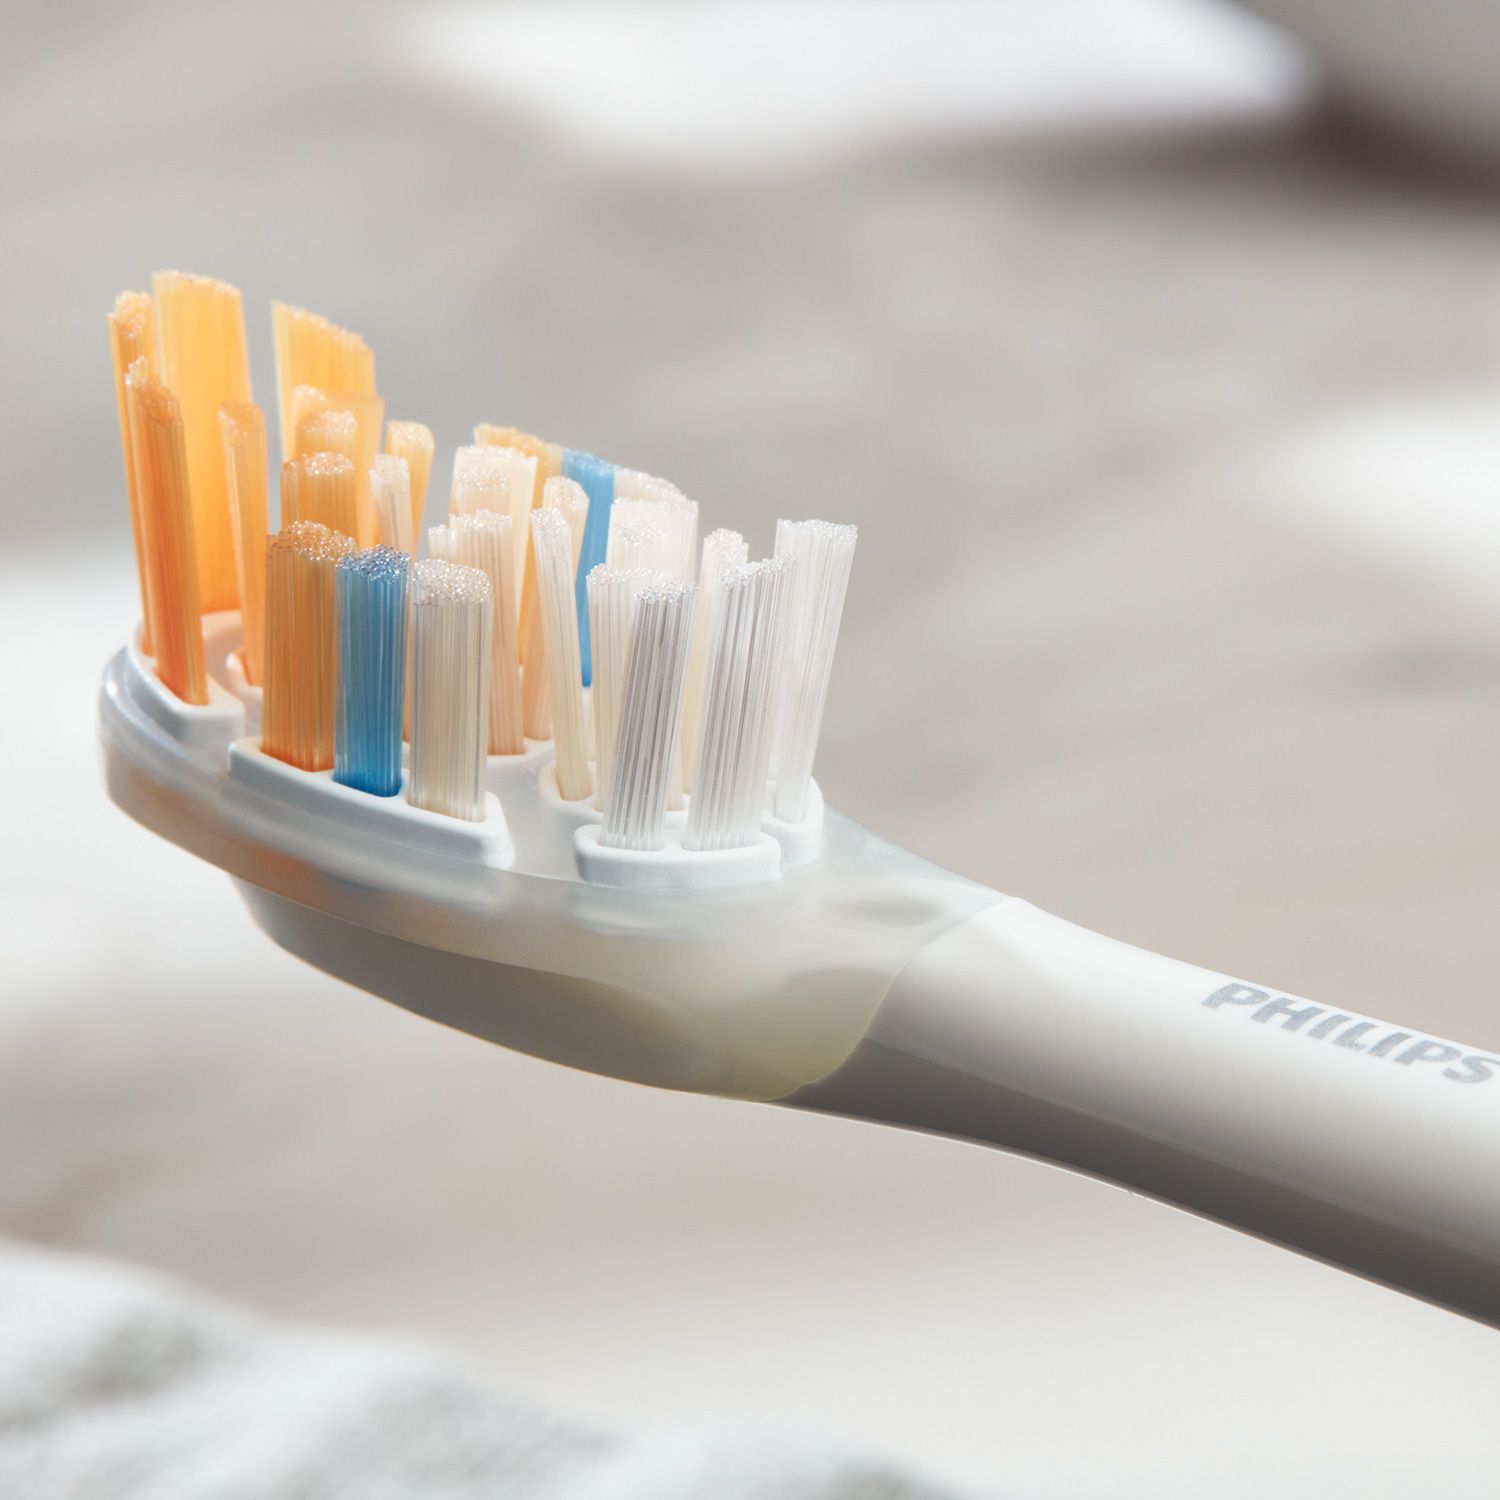 Philips toothbrush image close up of brush head